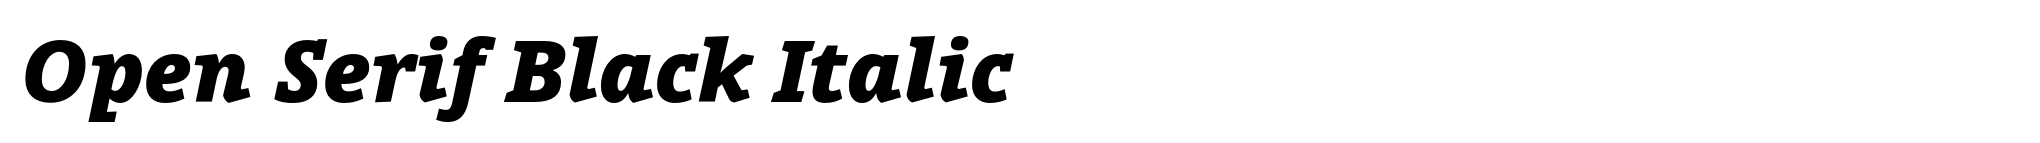 Open Serif Black Italic image